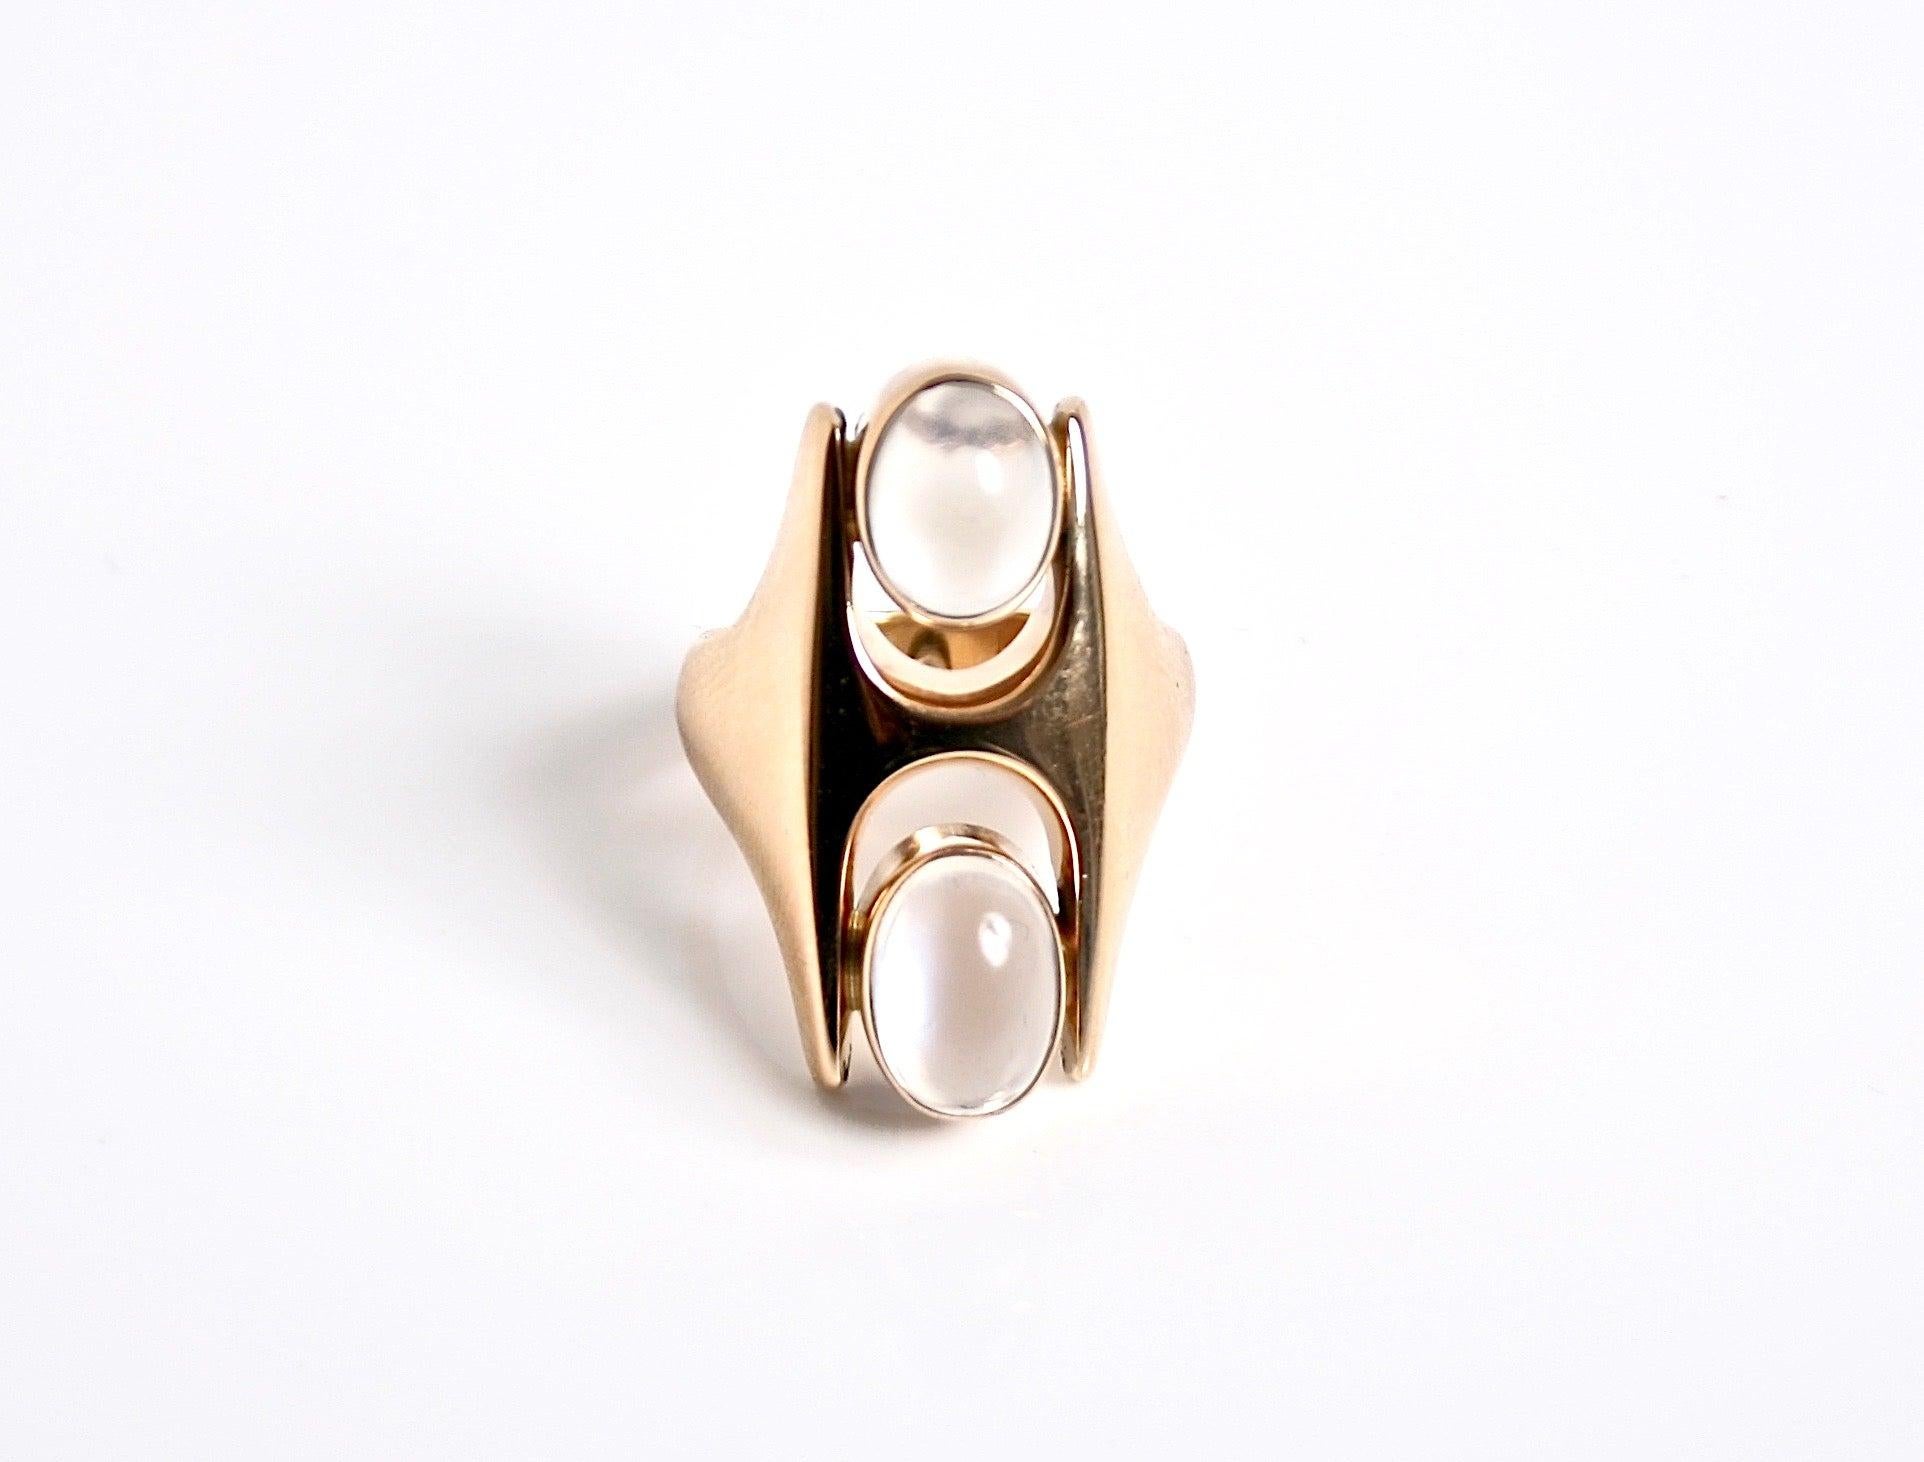 Rare Georg Jensen 18 Karat Gold & two cabochon Moonstone Ring designed by Henning Koppel Denmark c1967 Stunning example of Midcentury Modern Design
Design number 845
Size UK S